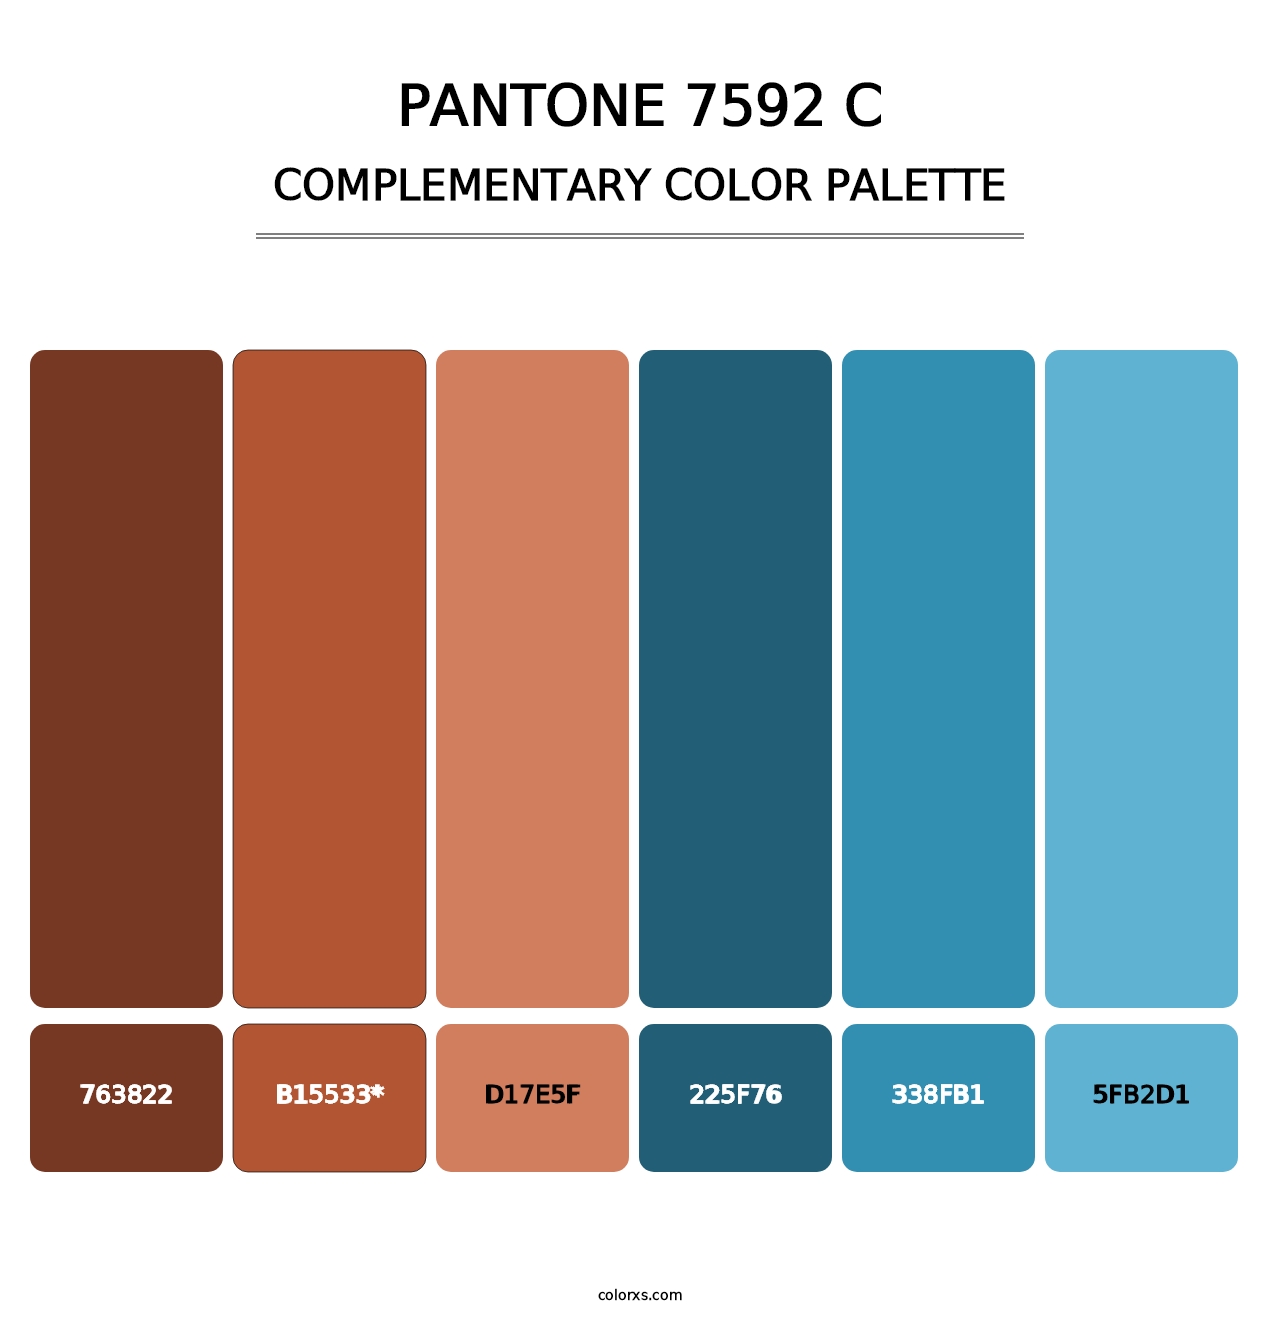 PANTONE 7592 C - Complementary Color Palette